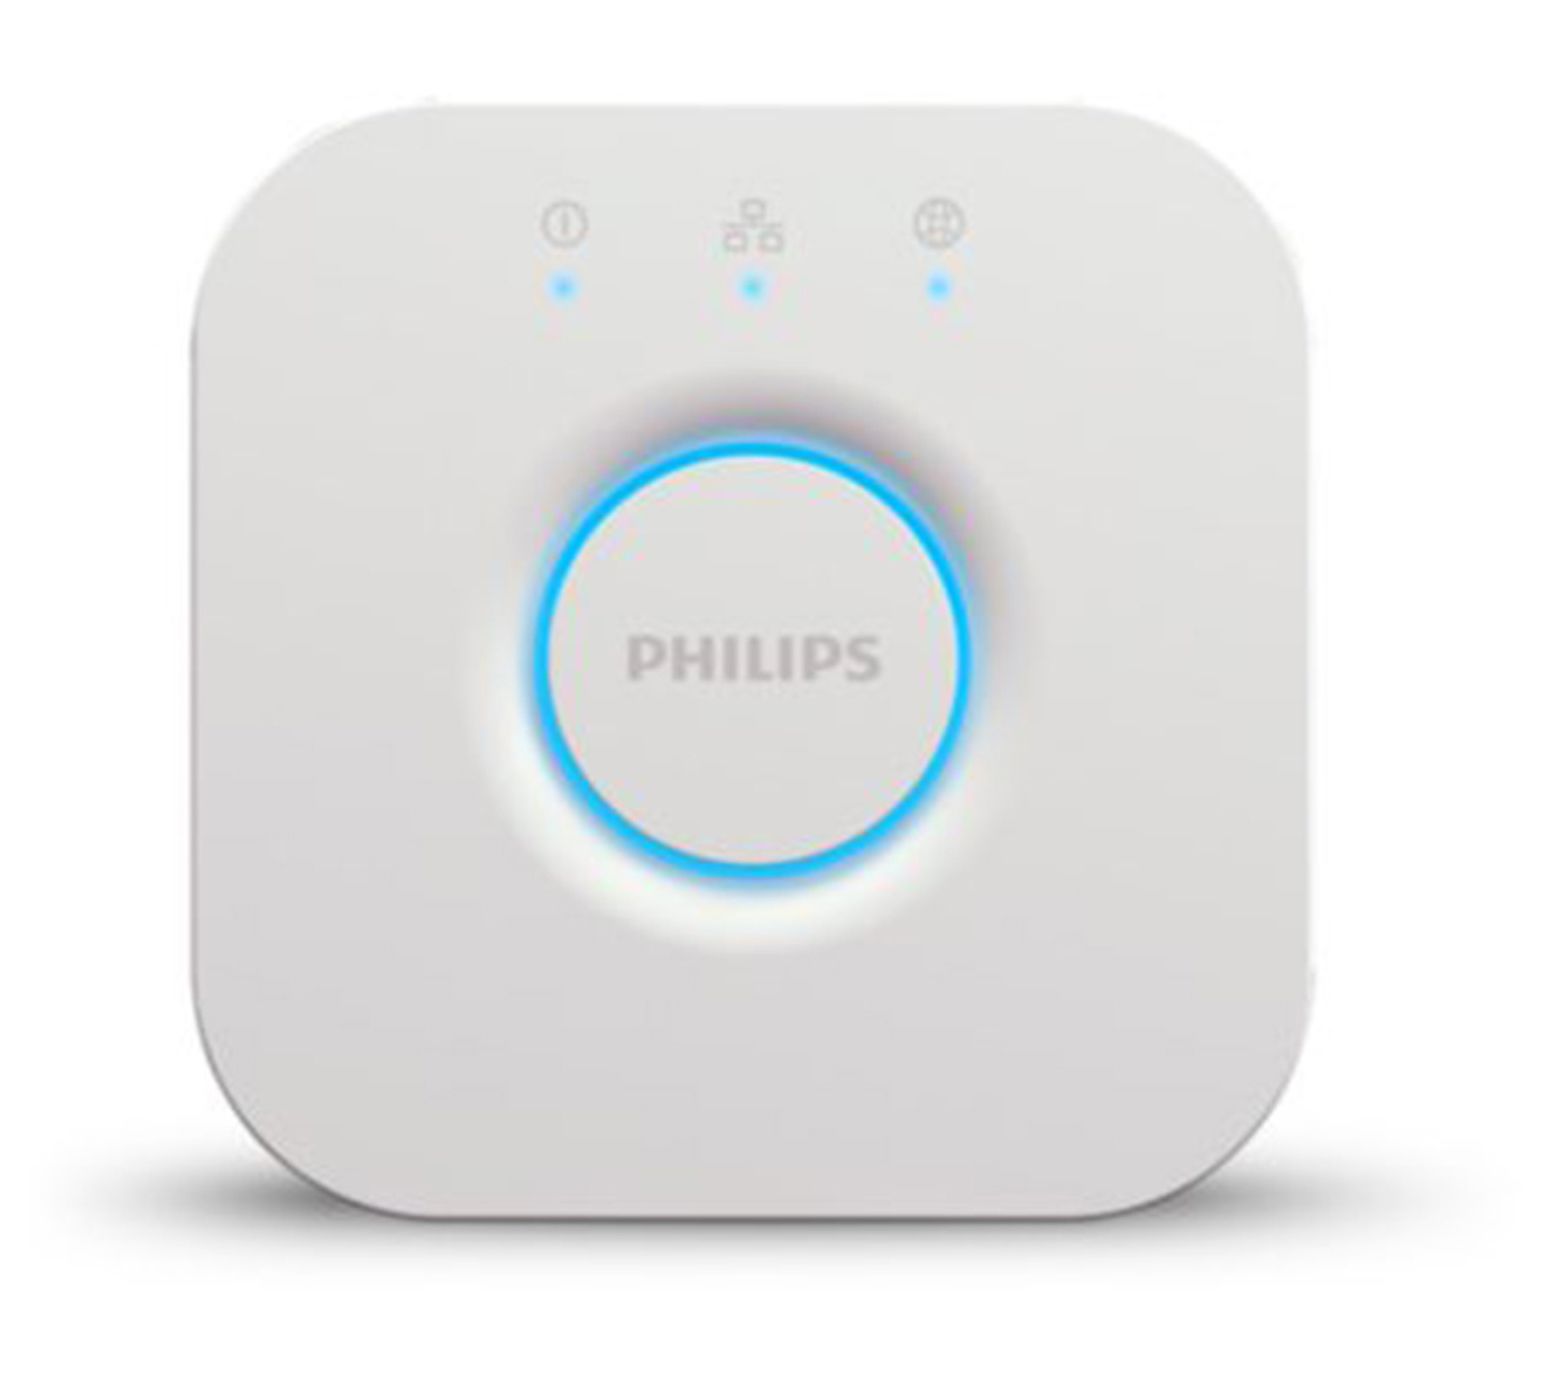 Aanleg oortelefoon software Philips Hue Bridge 2.0 - QVC.com